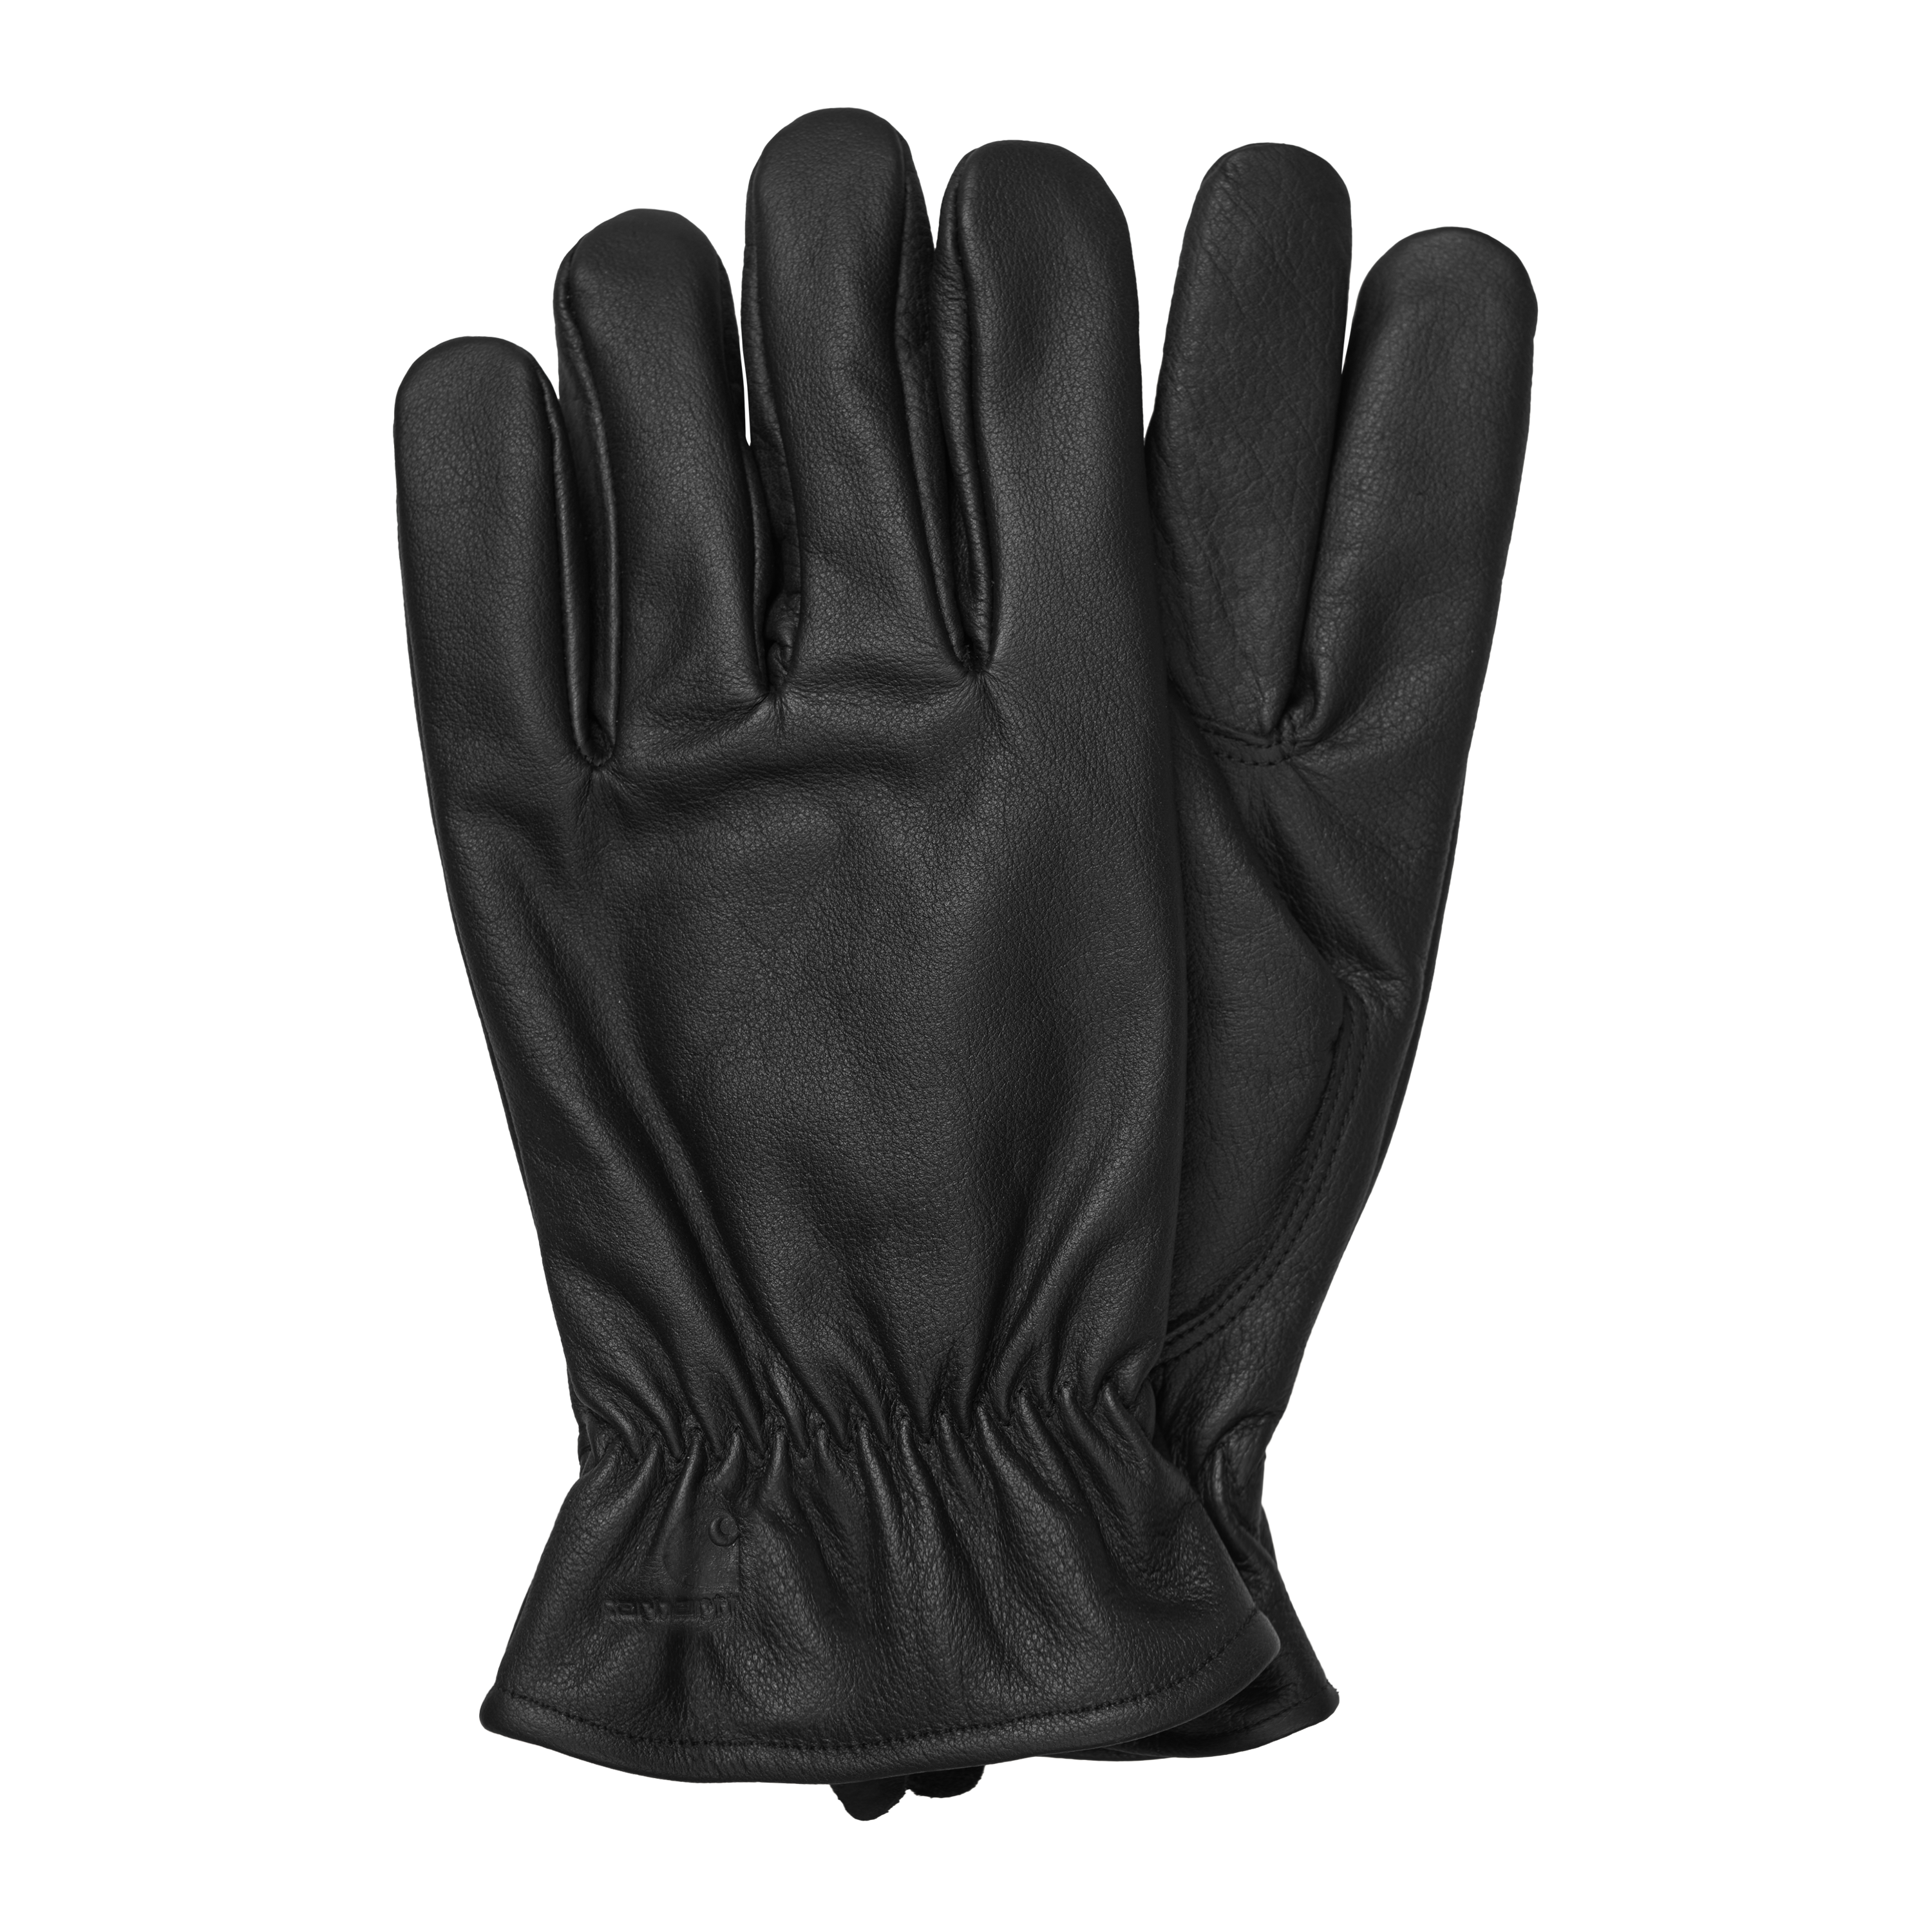 Carhartt WIP Fonda Gloves in Black